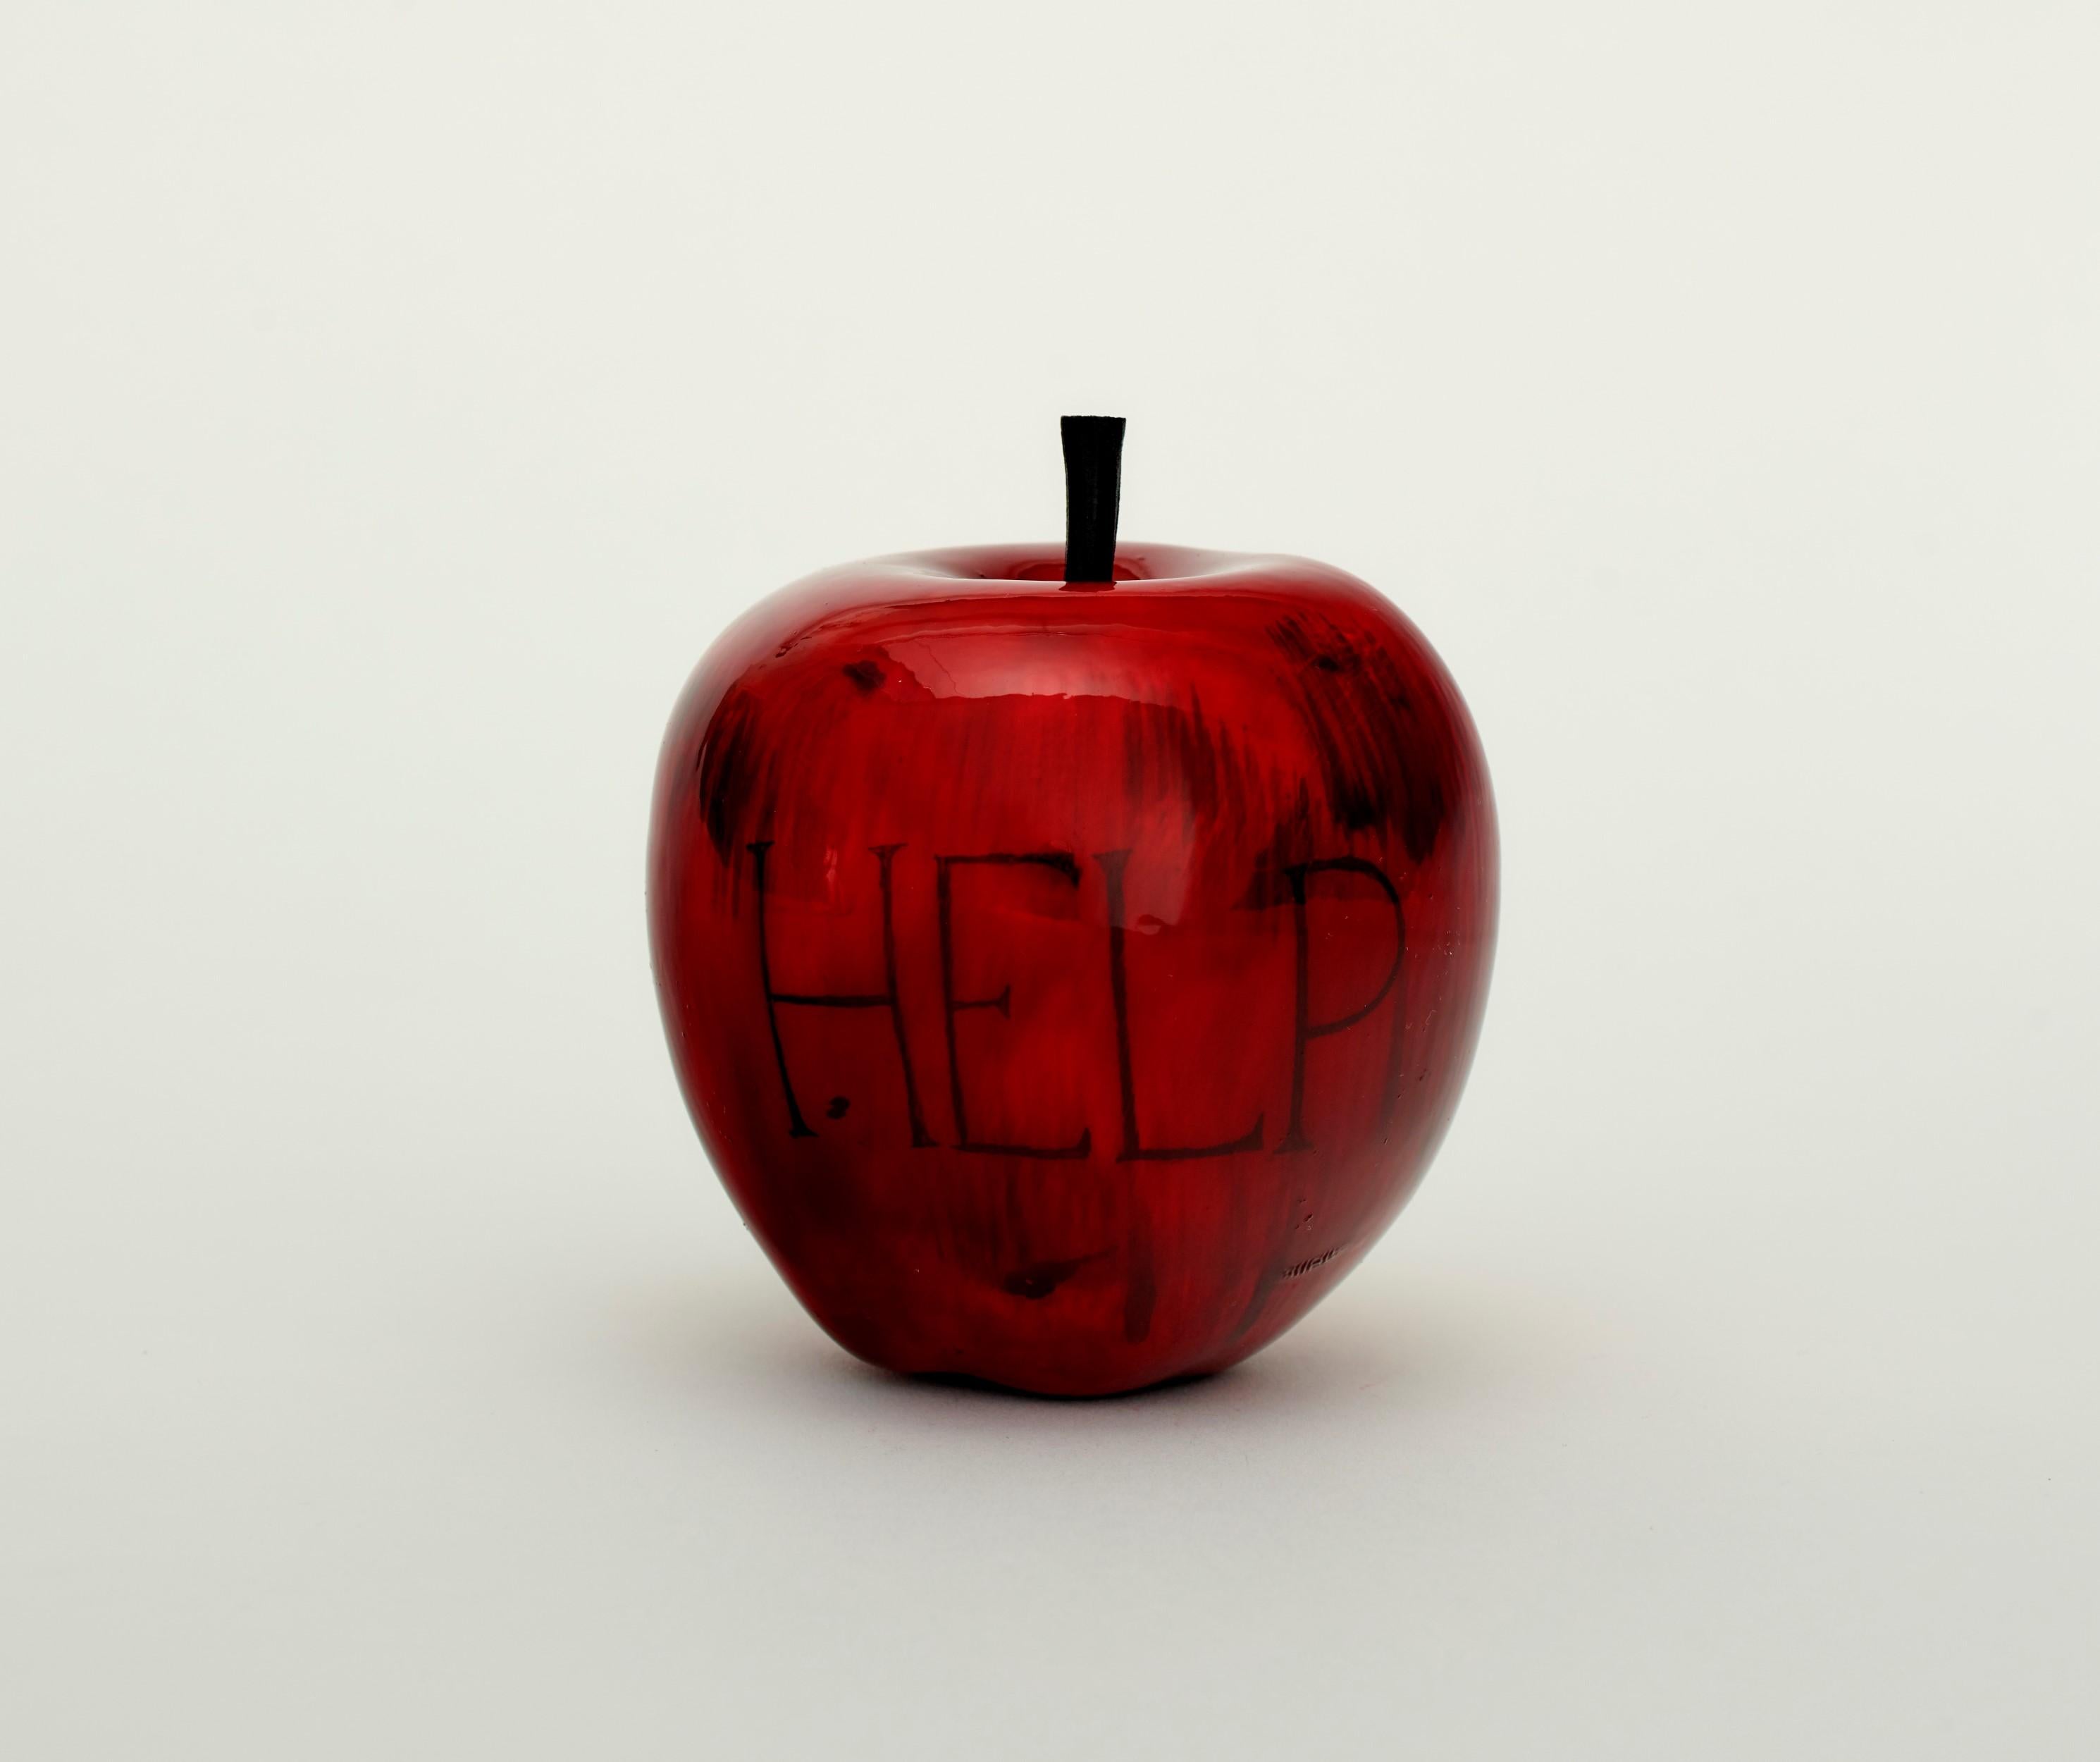 Barnaby Barford Figurative Sculpture - Help (Apple)